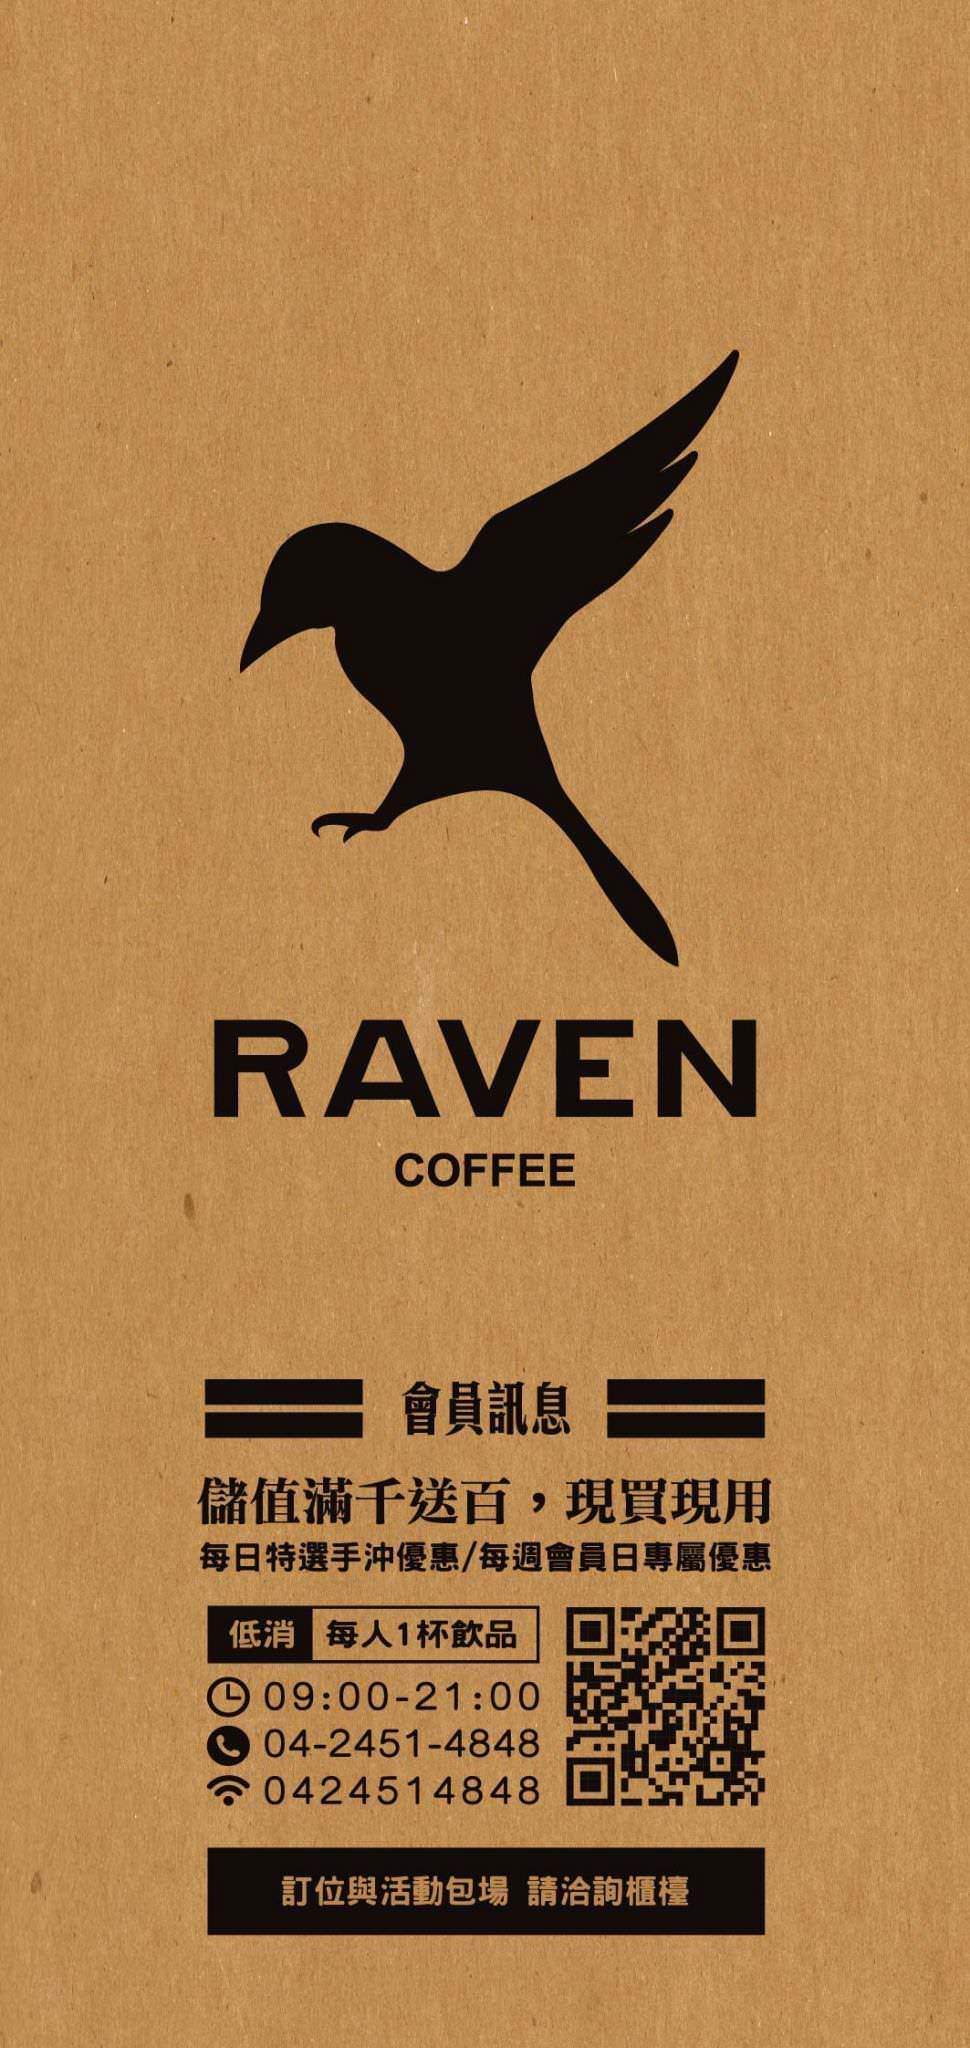 Raven coffee